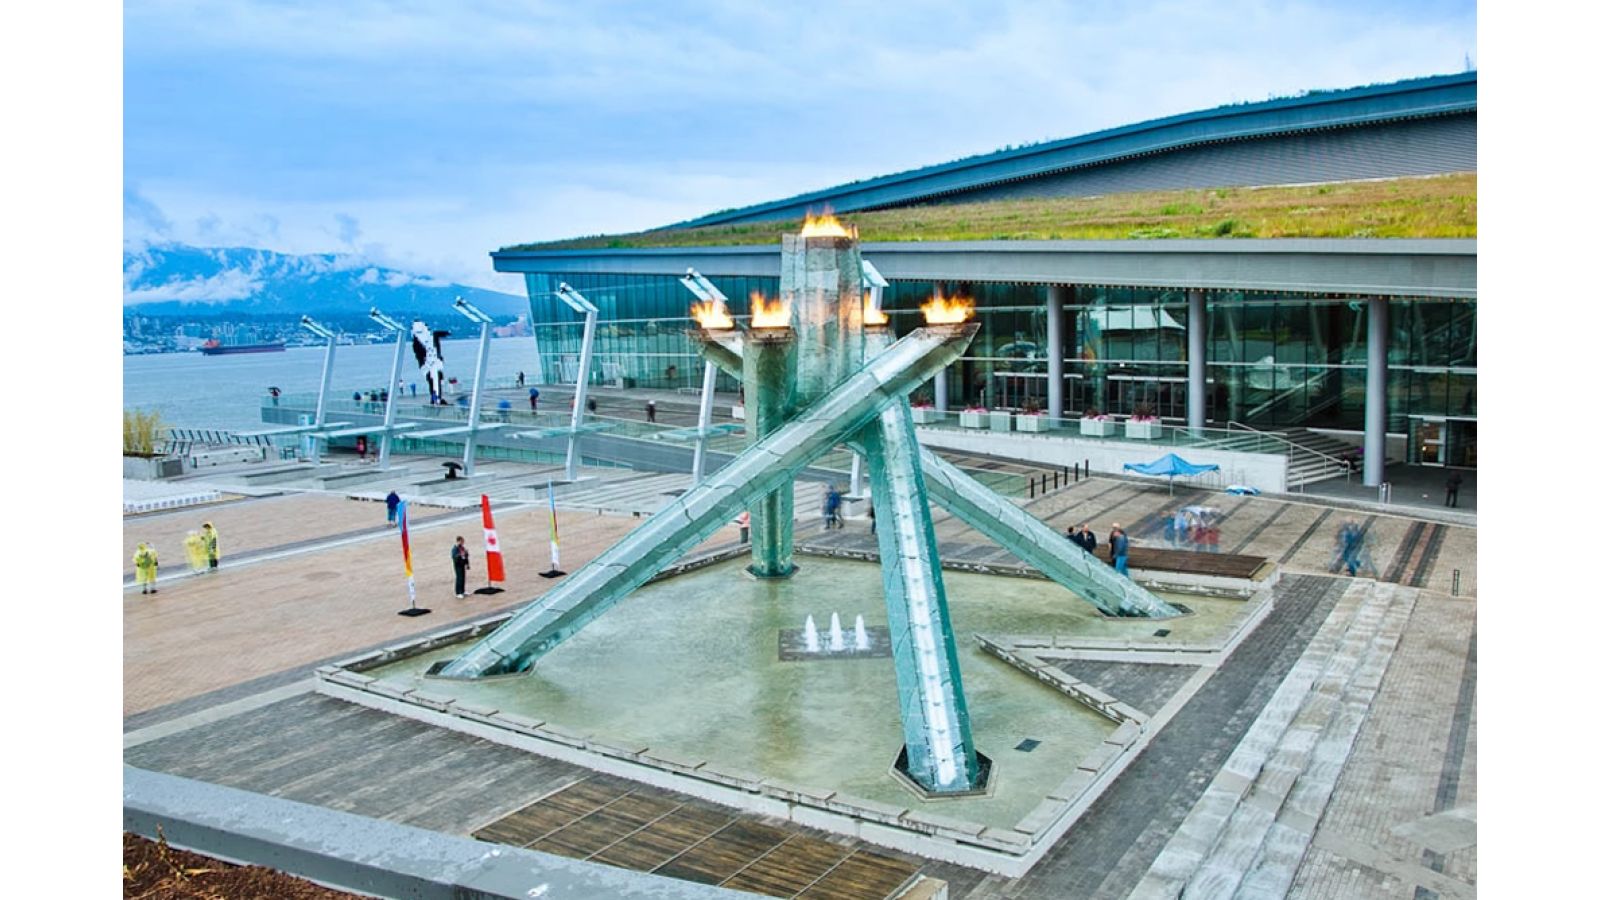 Vancouver Olympic Cauldron